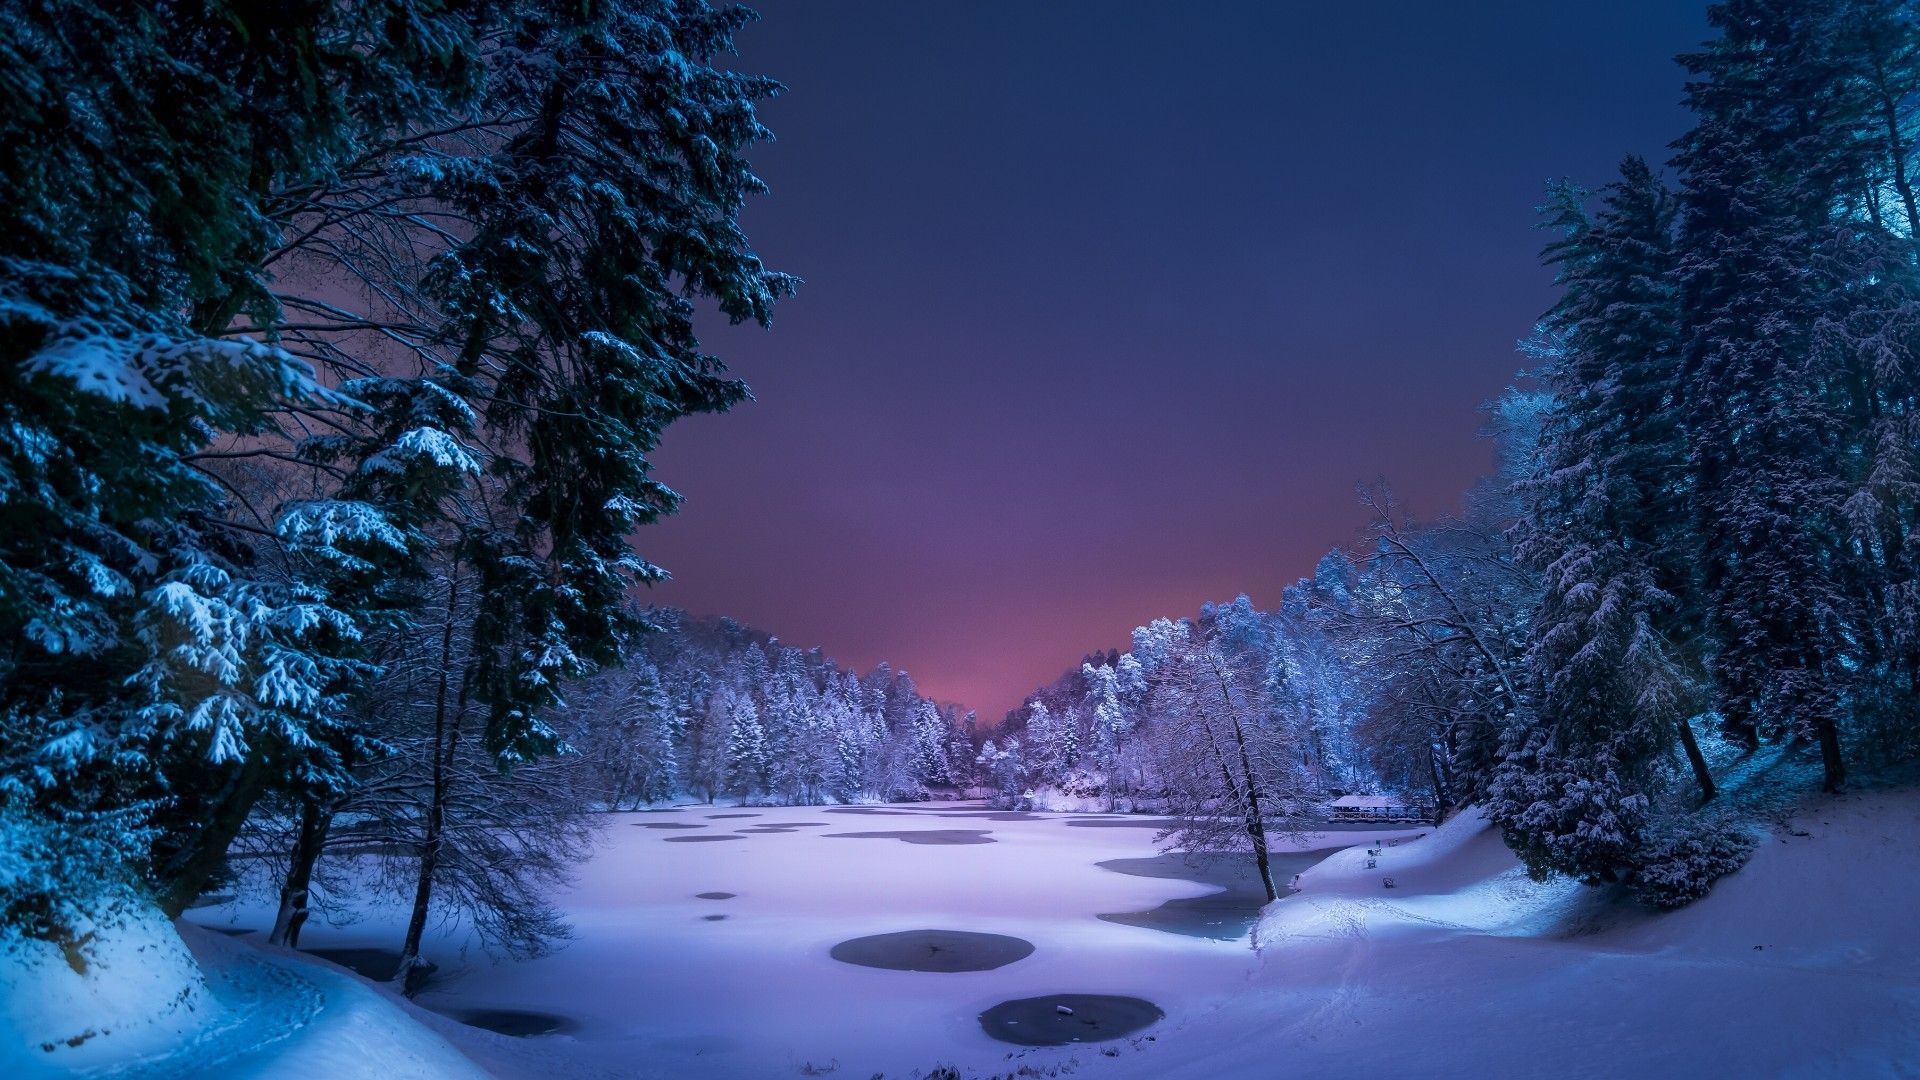 Winter Forest Night Wallpaper Picture On Wallpaper 1080p HD. Winter landscape, Winter desktop background, Winter wallpaper